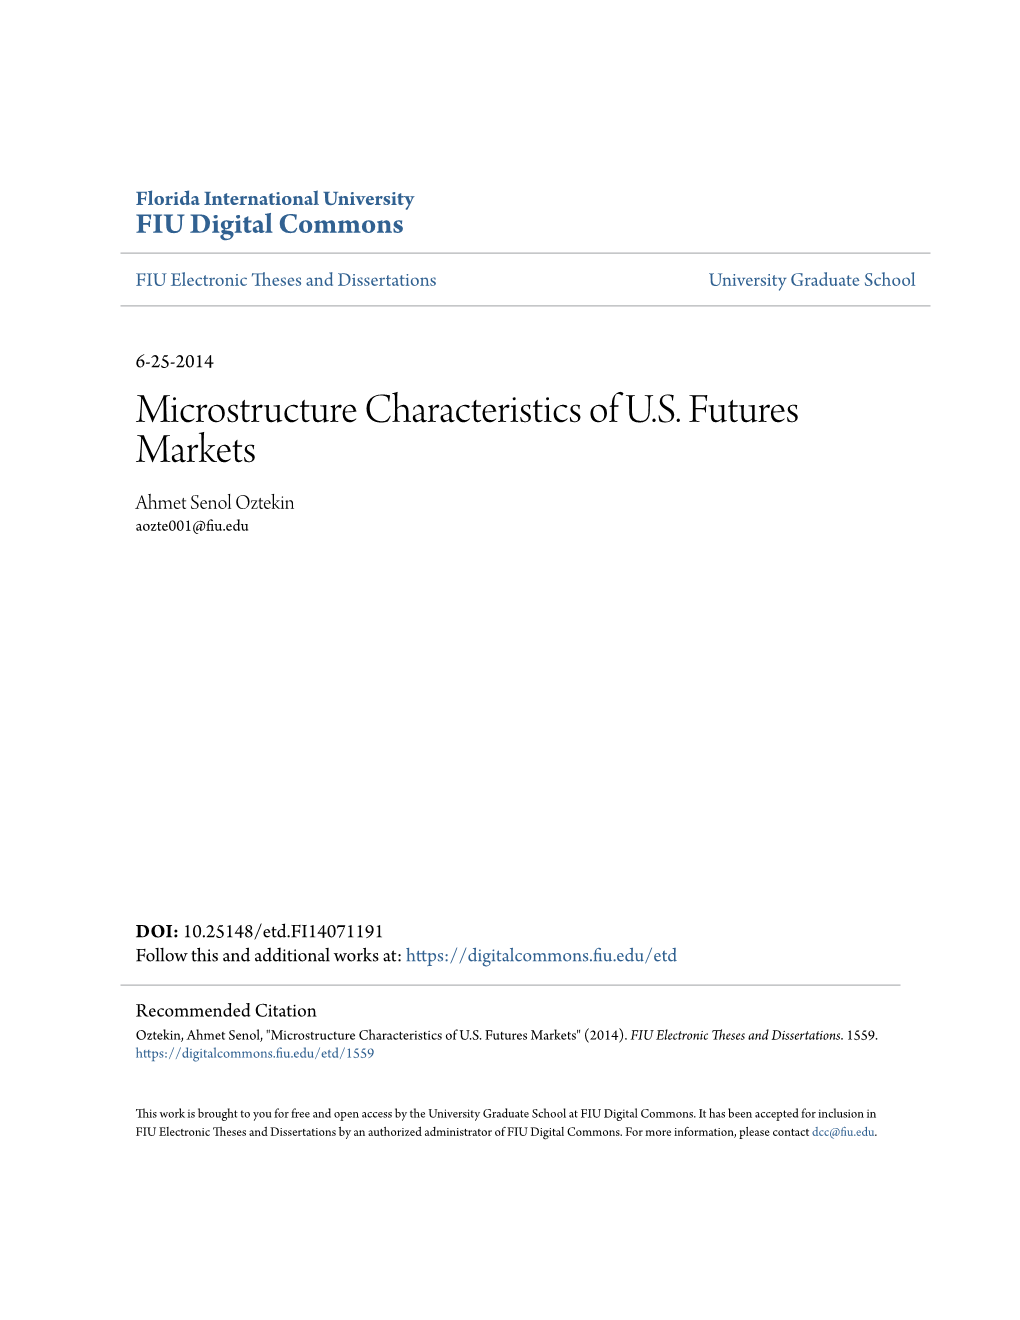 Microstructure Characteristics of U.S. Futures Markets Ahmet Senol Oztekin Aozte001@Fiu.Edu